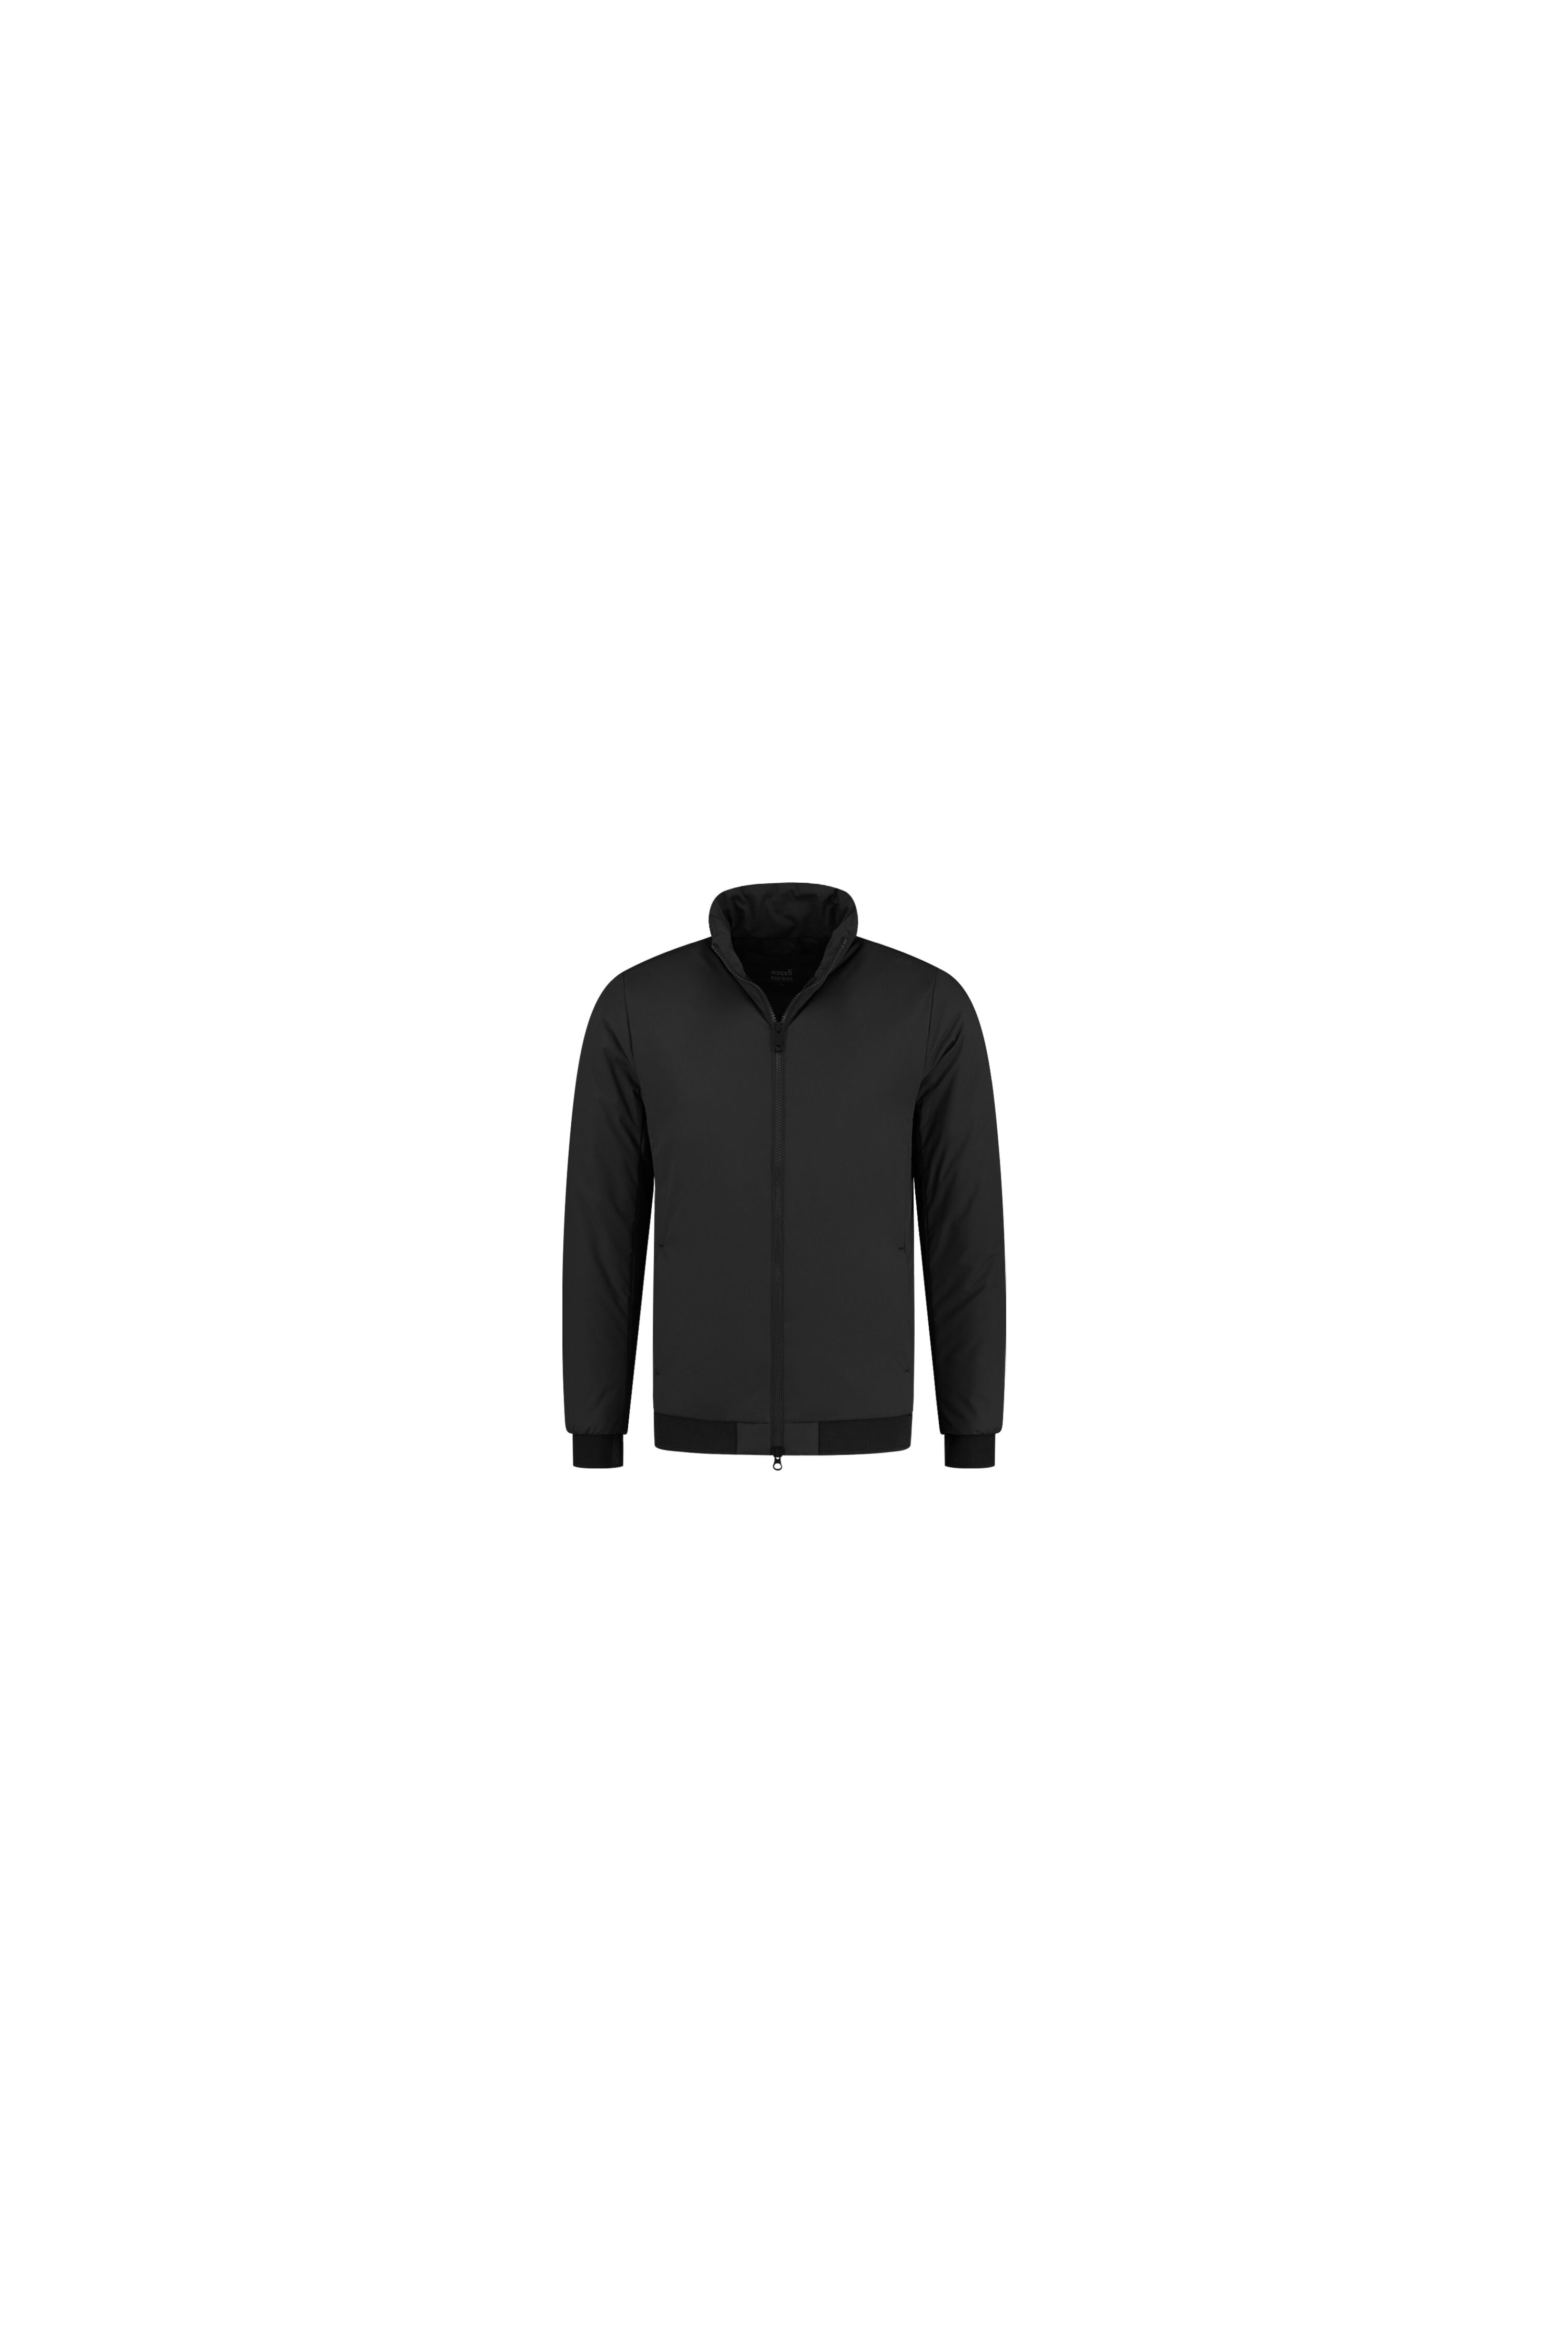 Scandinavian Edition Studio Jacket Black - 1027 | Bloom Fashion